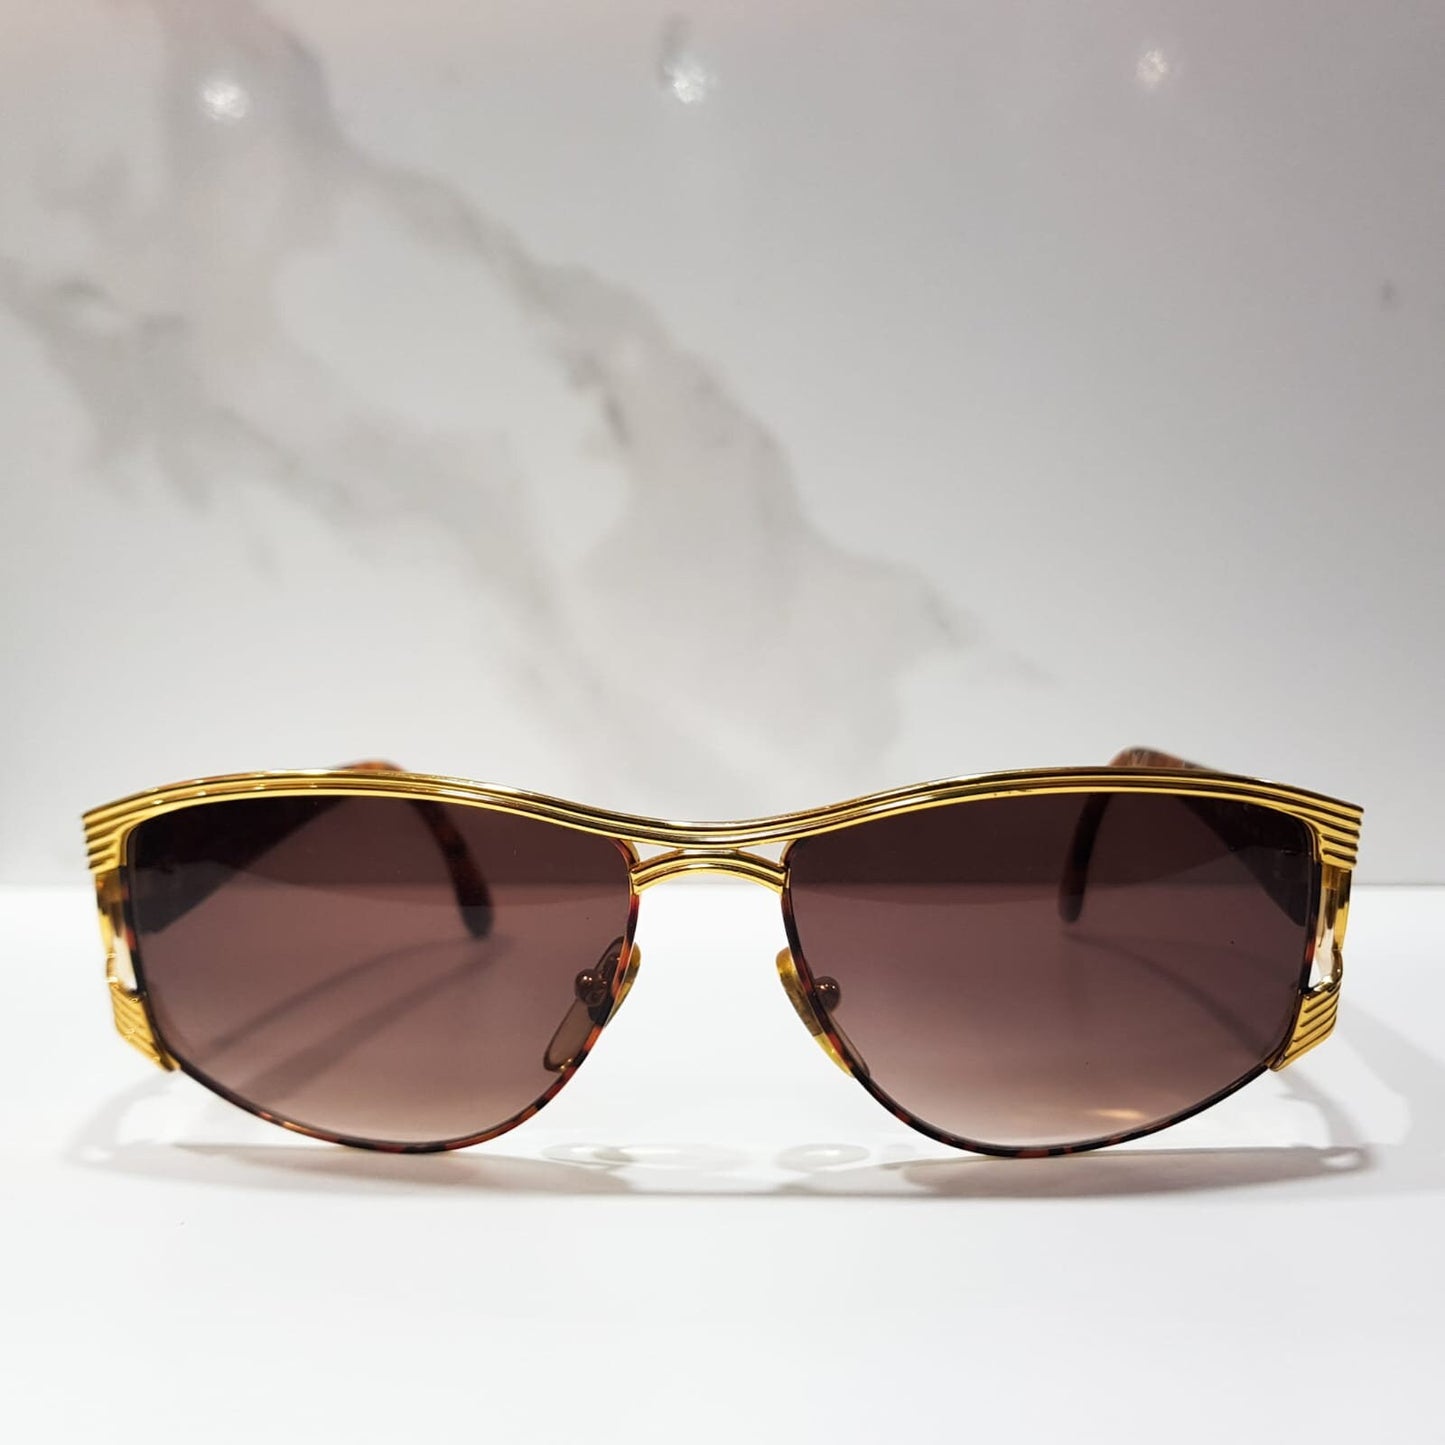 Fendi FS232 vintage sunglasses lunette brille occhiali sole gafas